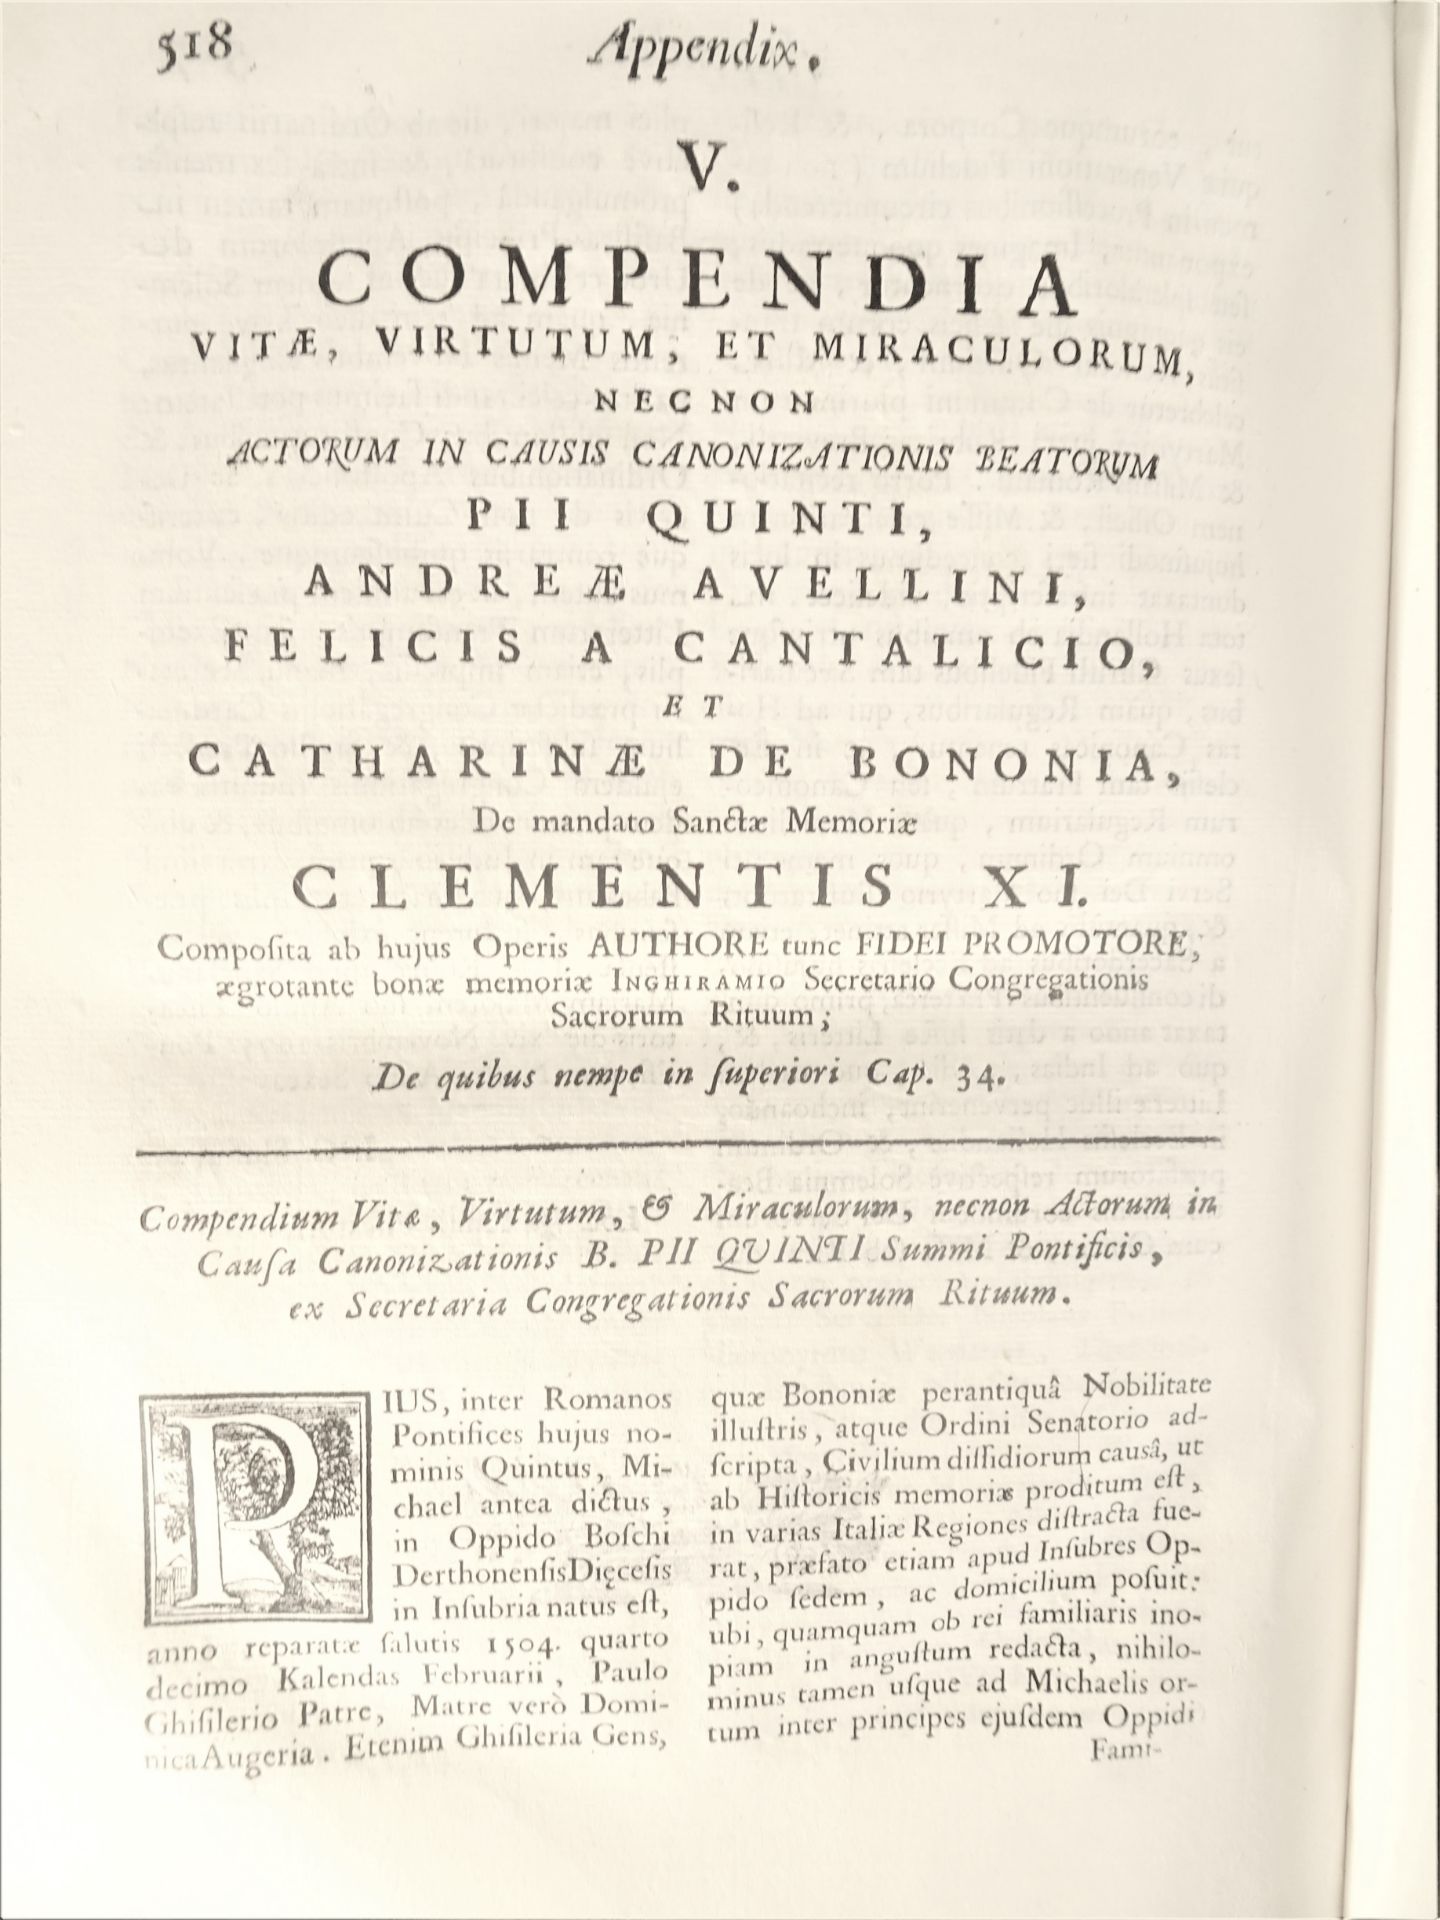 |Réligion| Prospero de Lambertinis, "De servorum dei beatificatione et beatorum canonizatione - Image 5 of 8